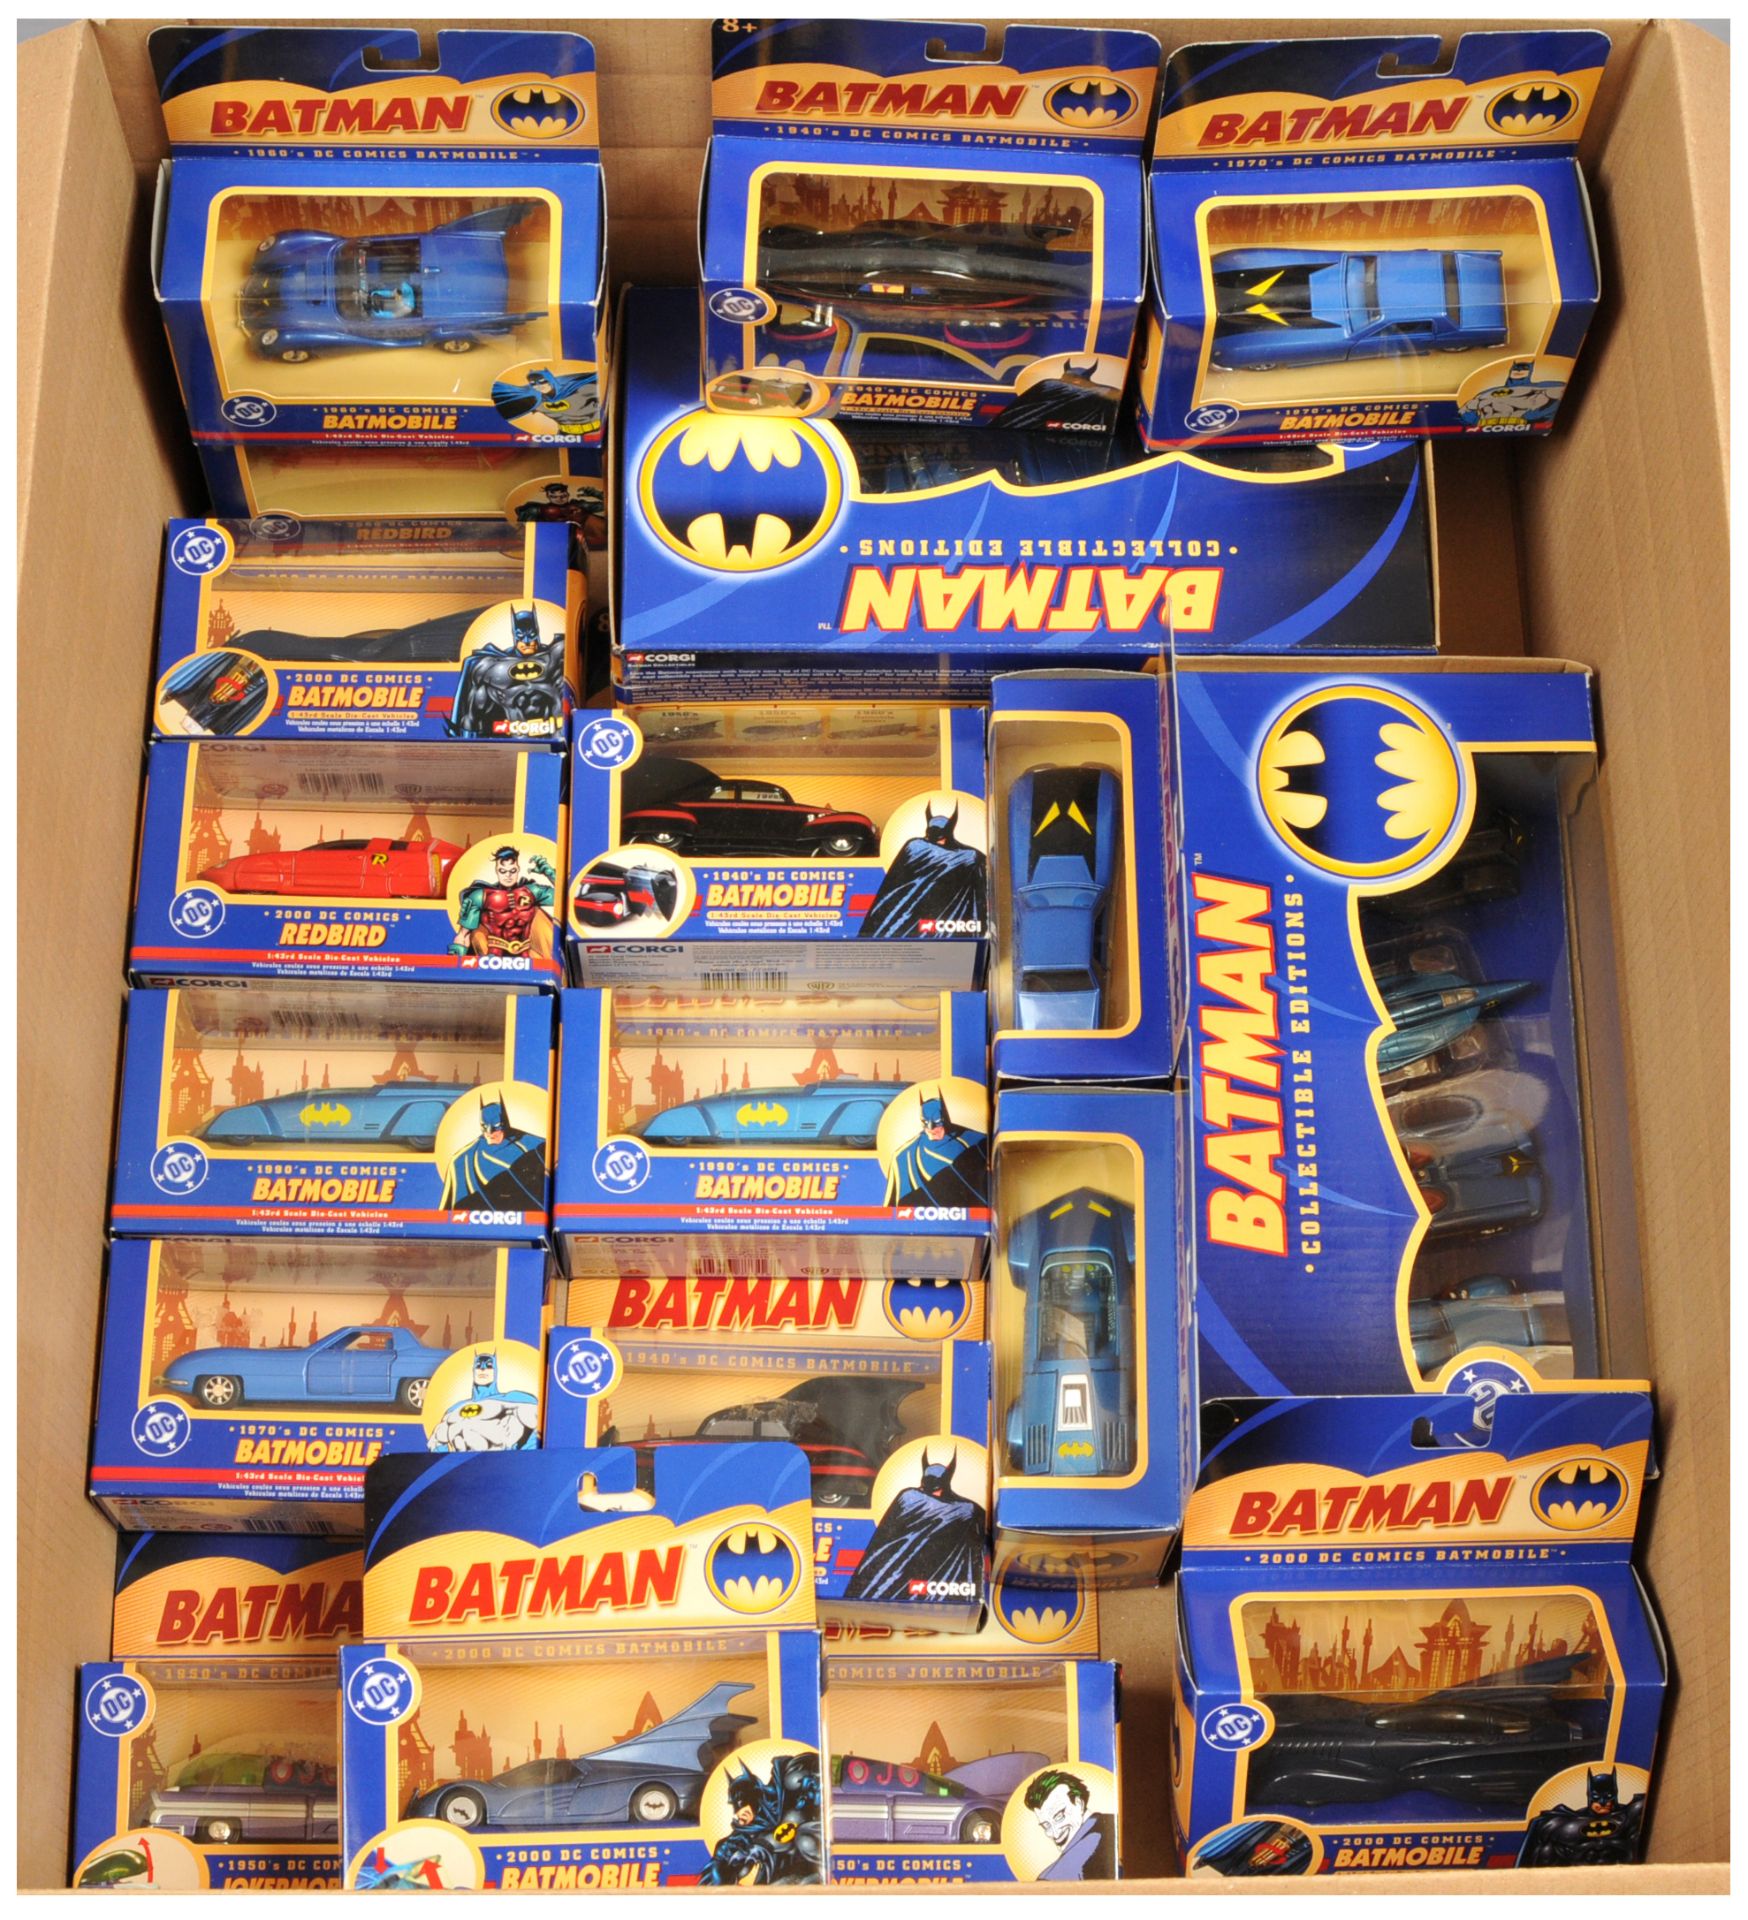 Corgi "Batman" Group Of 19 To include - Redbird, 1970's Batmobile, Jokermobile plus others includ...